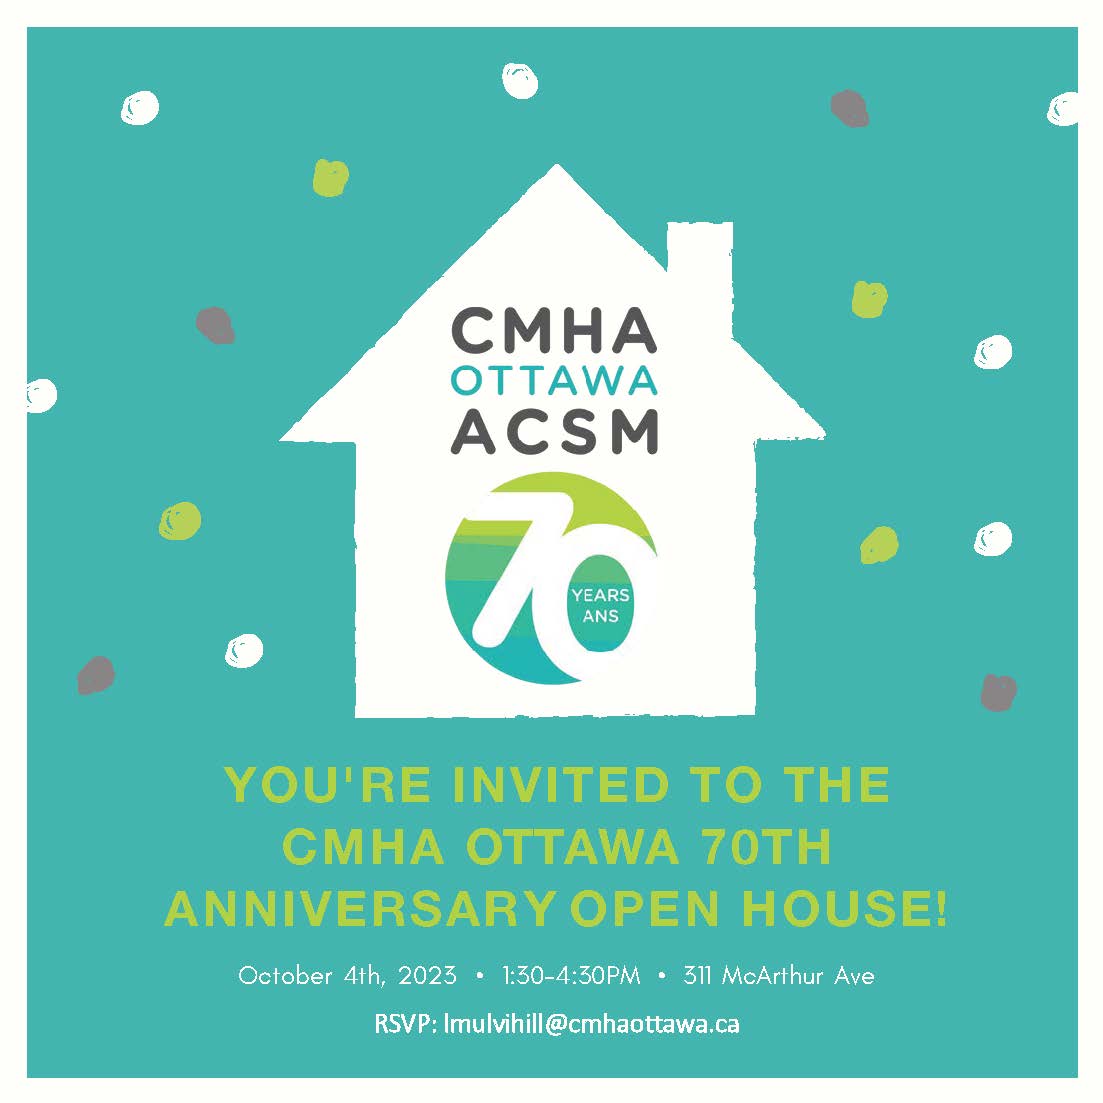 CMHA Ottawa's 70th Anniversary Open House Celebration